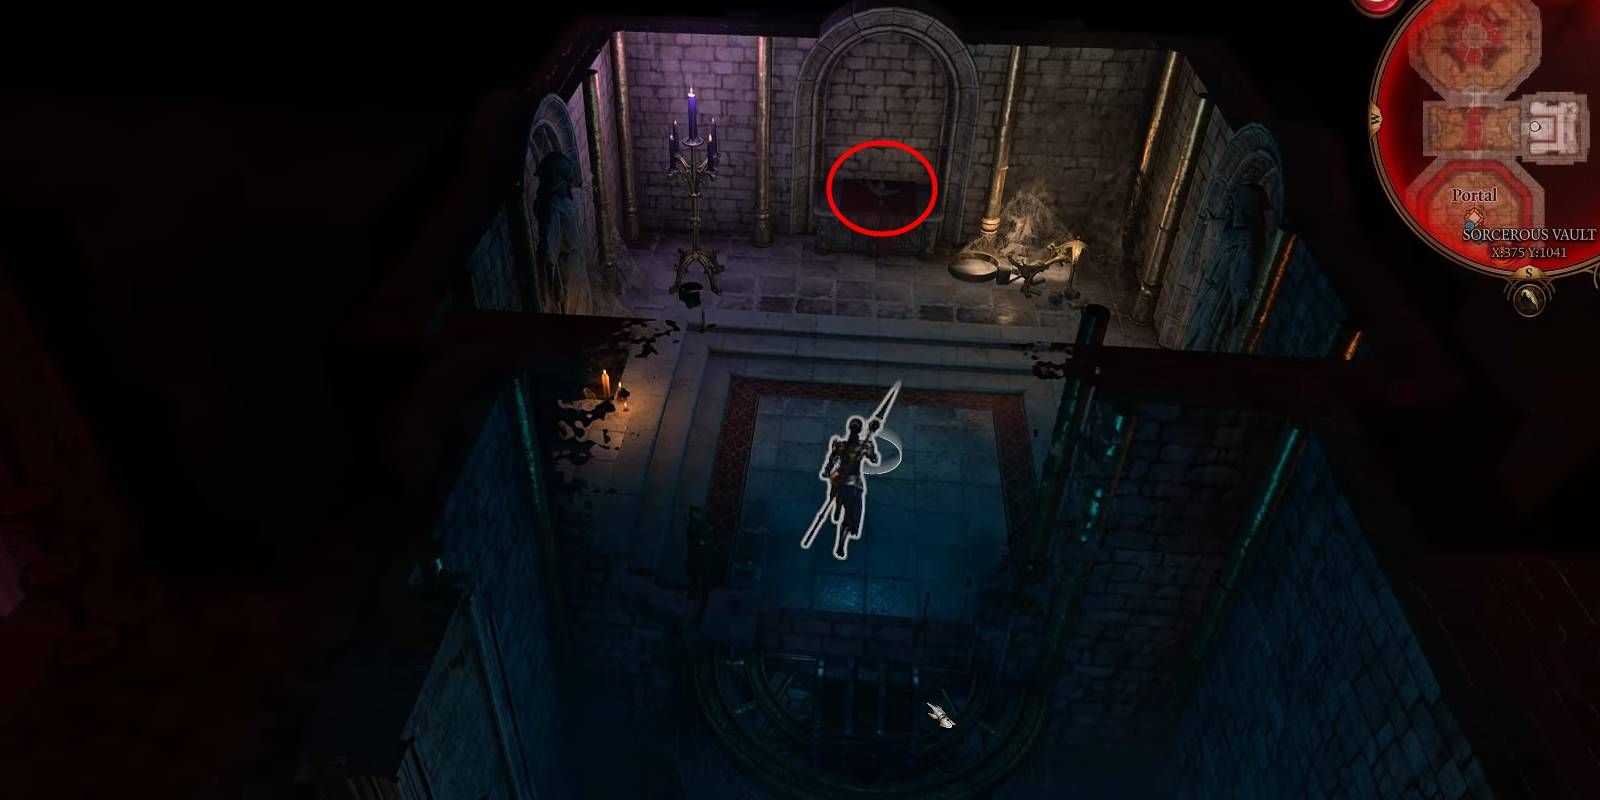 Baldur's Gate 3 Finding the Peculiar Lamp in the Sorcerous Vault 